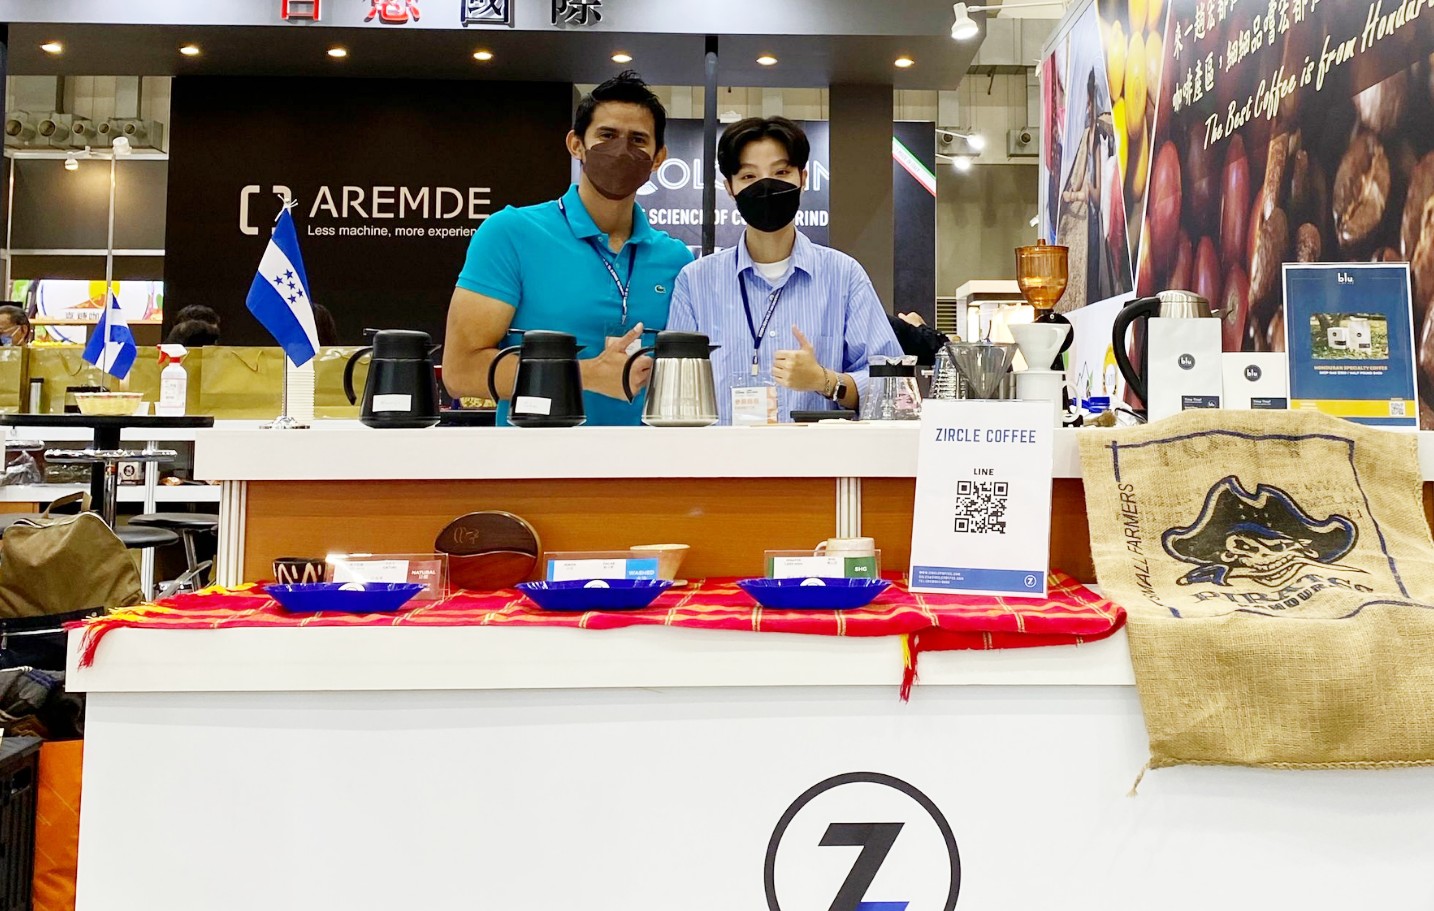 Café hondureño Zircle Coffee, participó en feria internacional en Taiwán